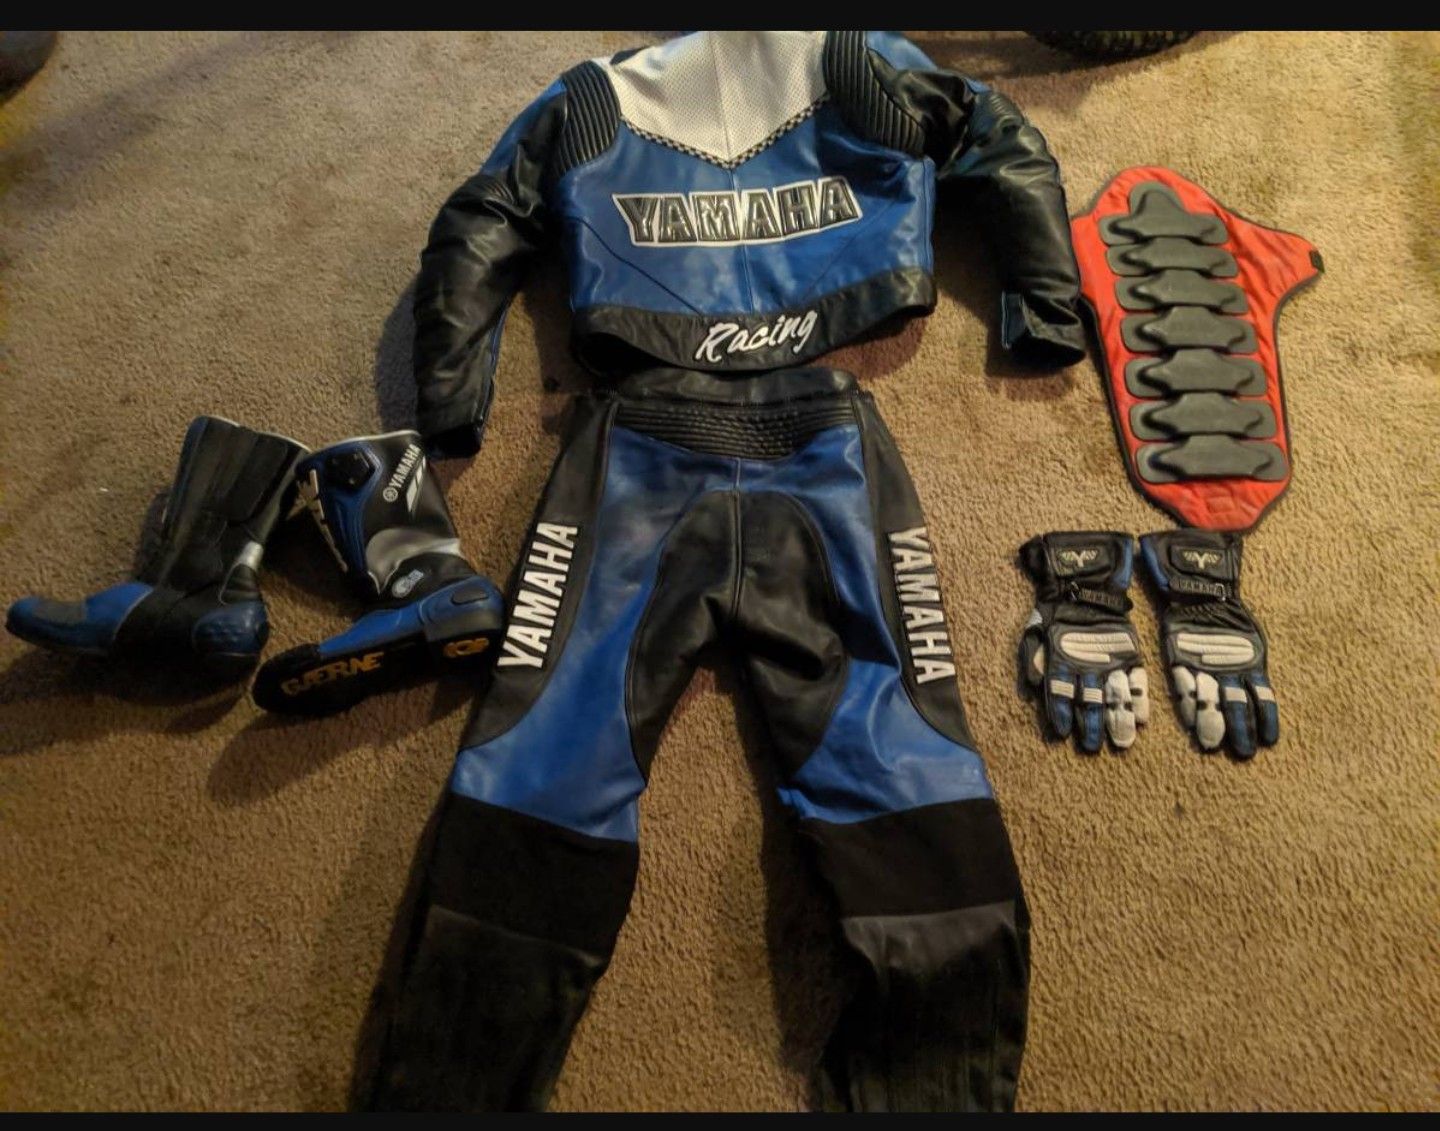 Yamaha racing leathers